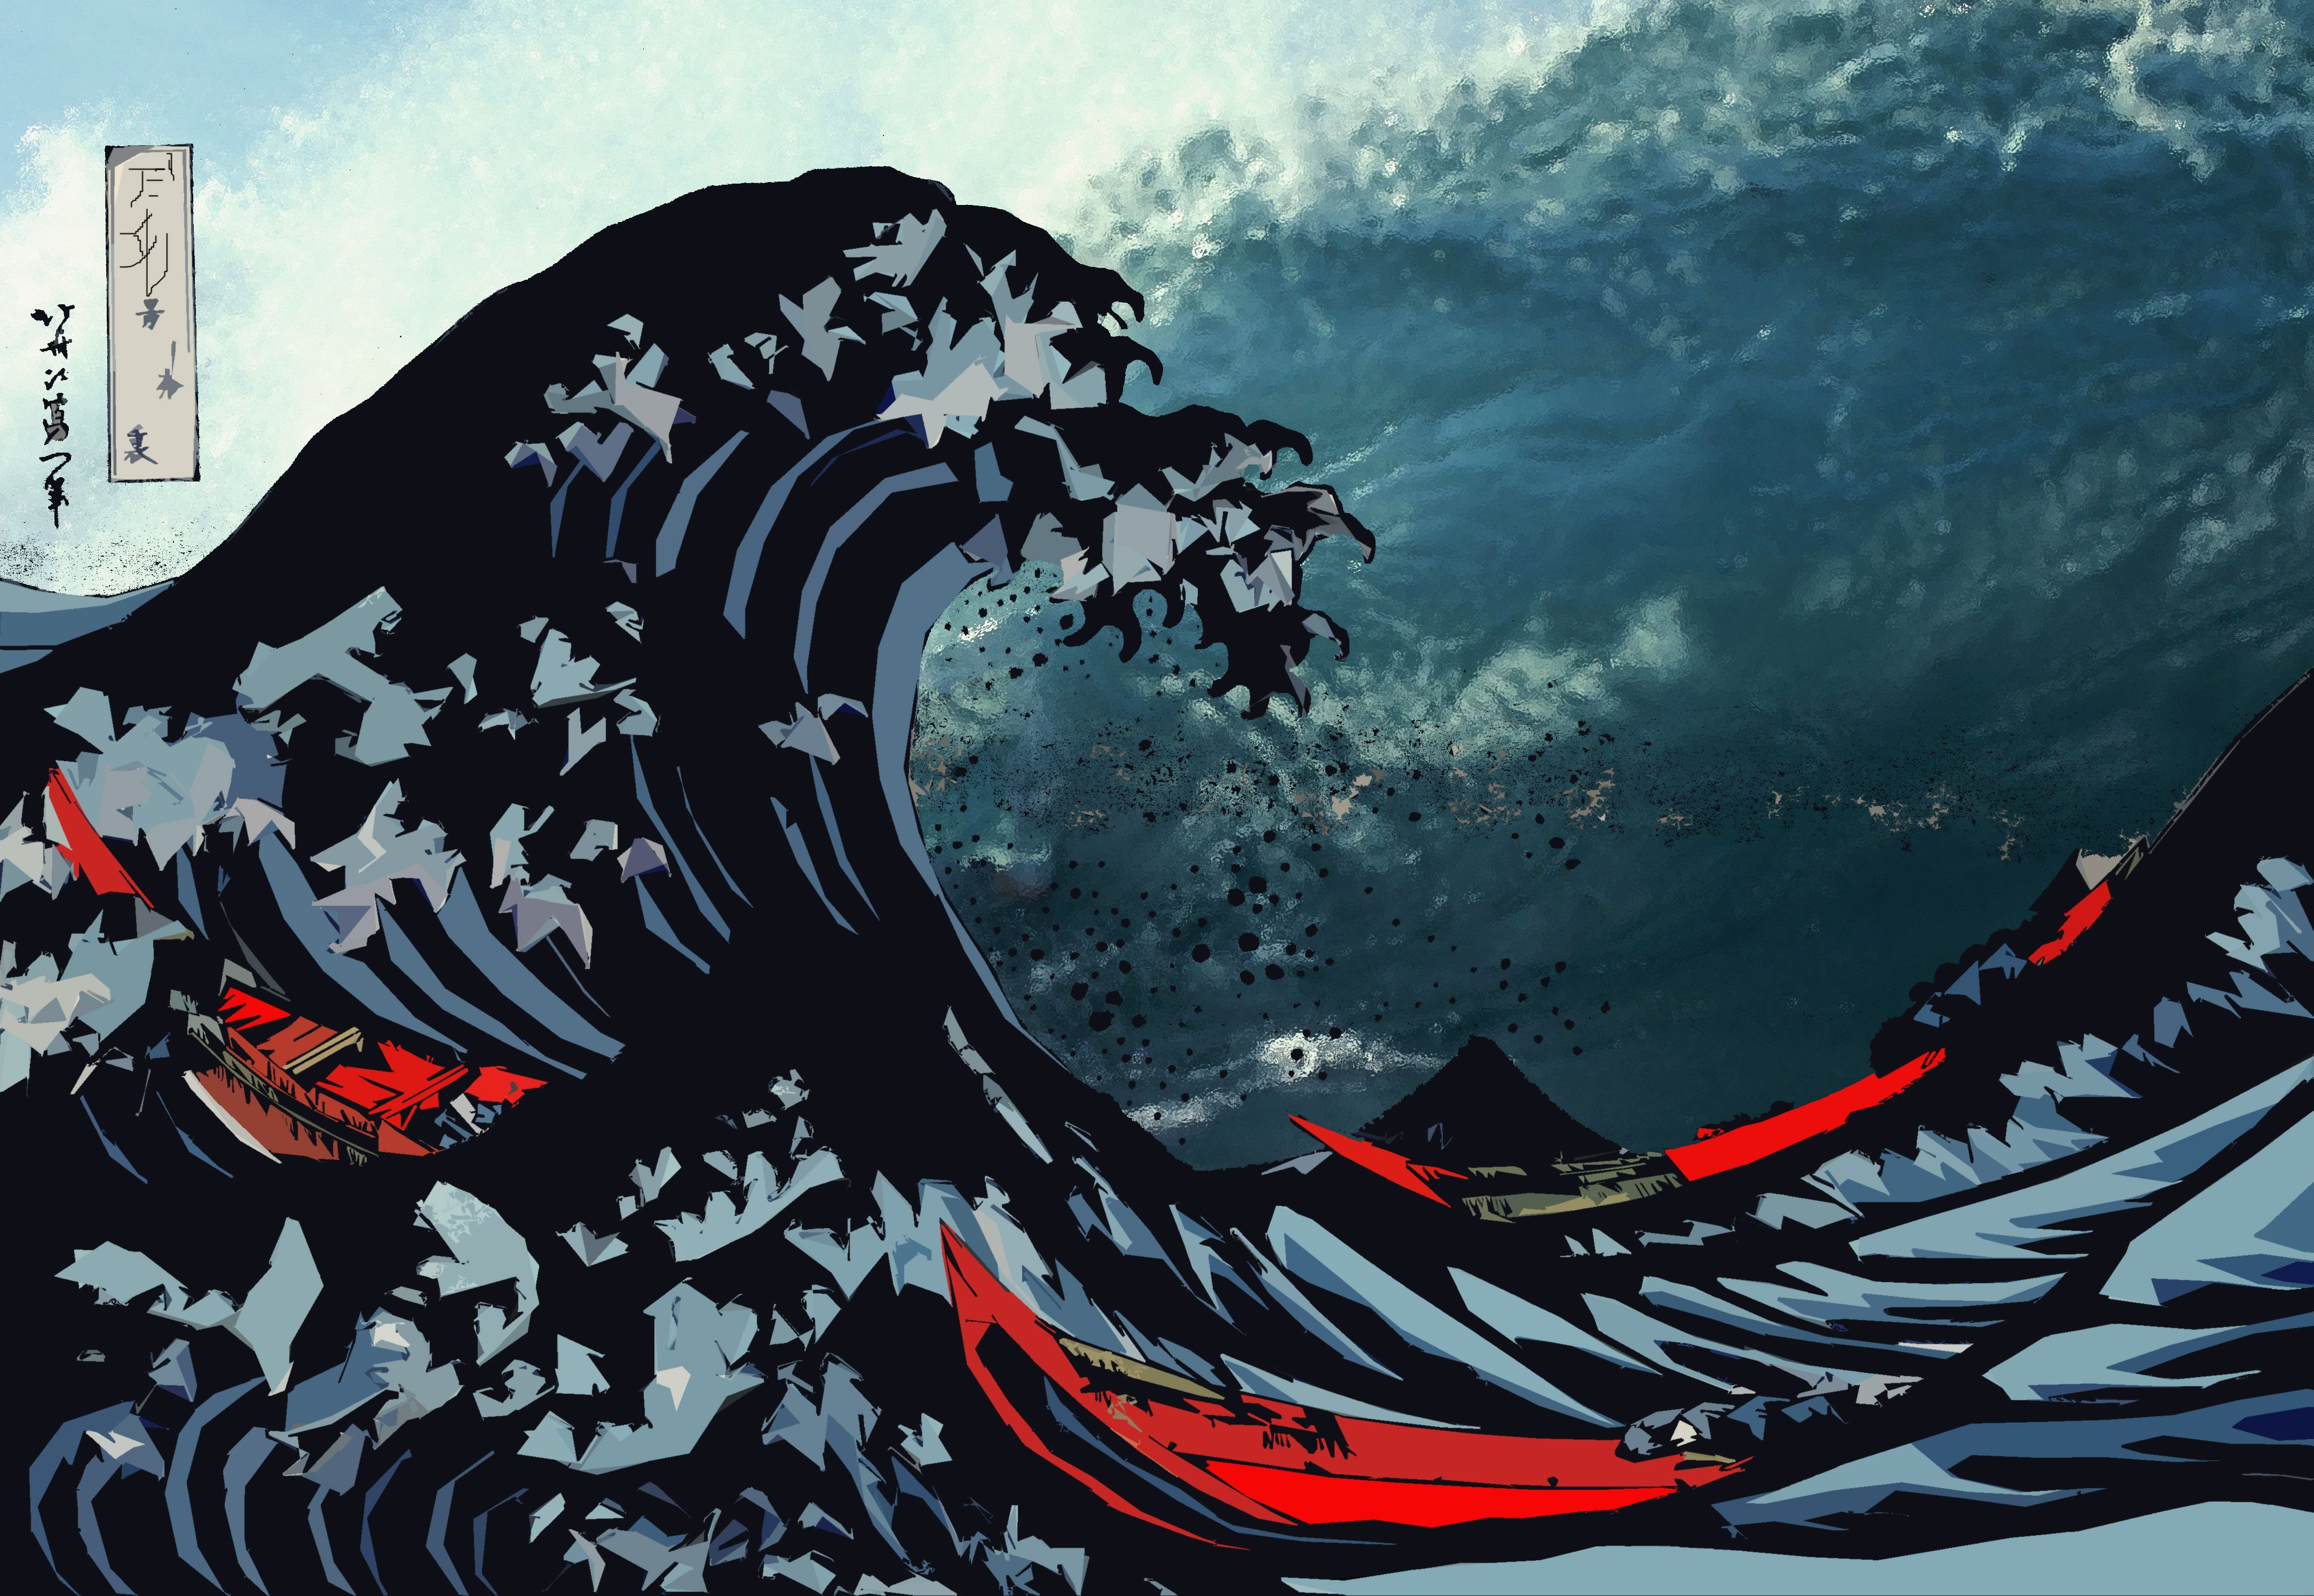 Hokusai's Big wave of Kamakura by Gaijin Kenjutsu. Wave art, Surf painting, Japanese wave painting